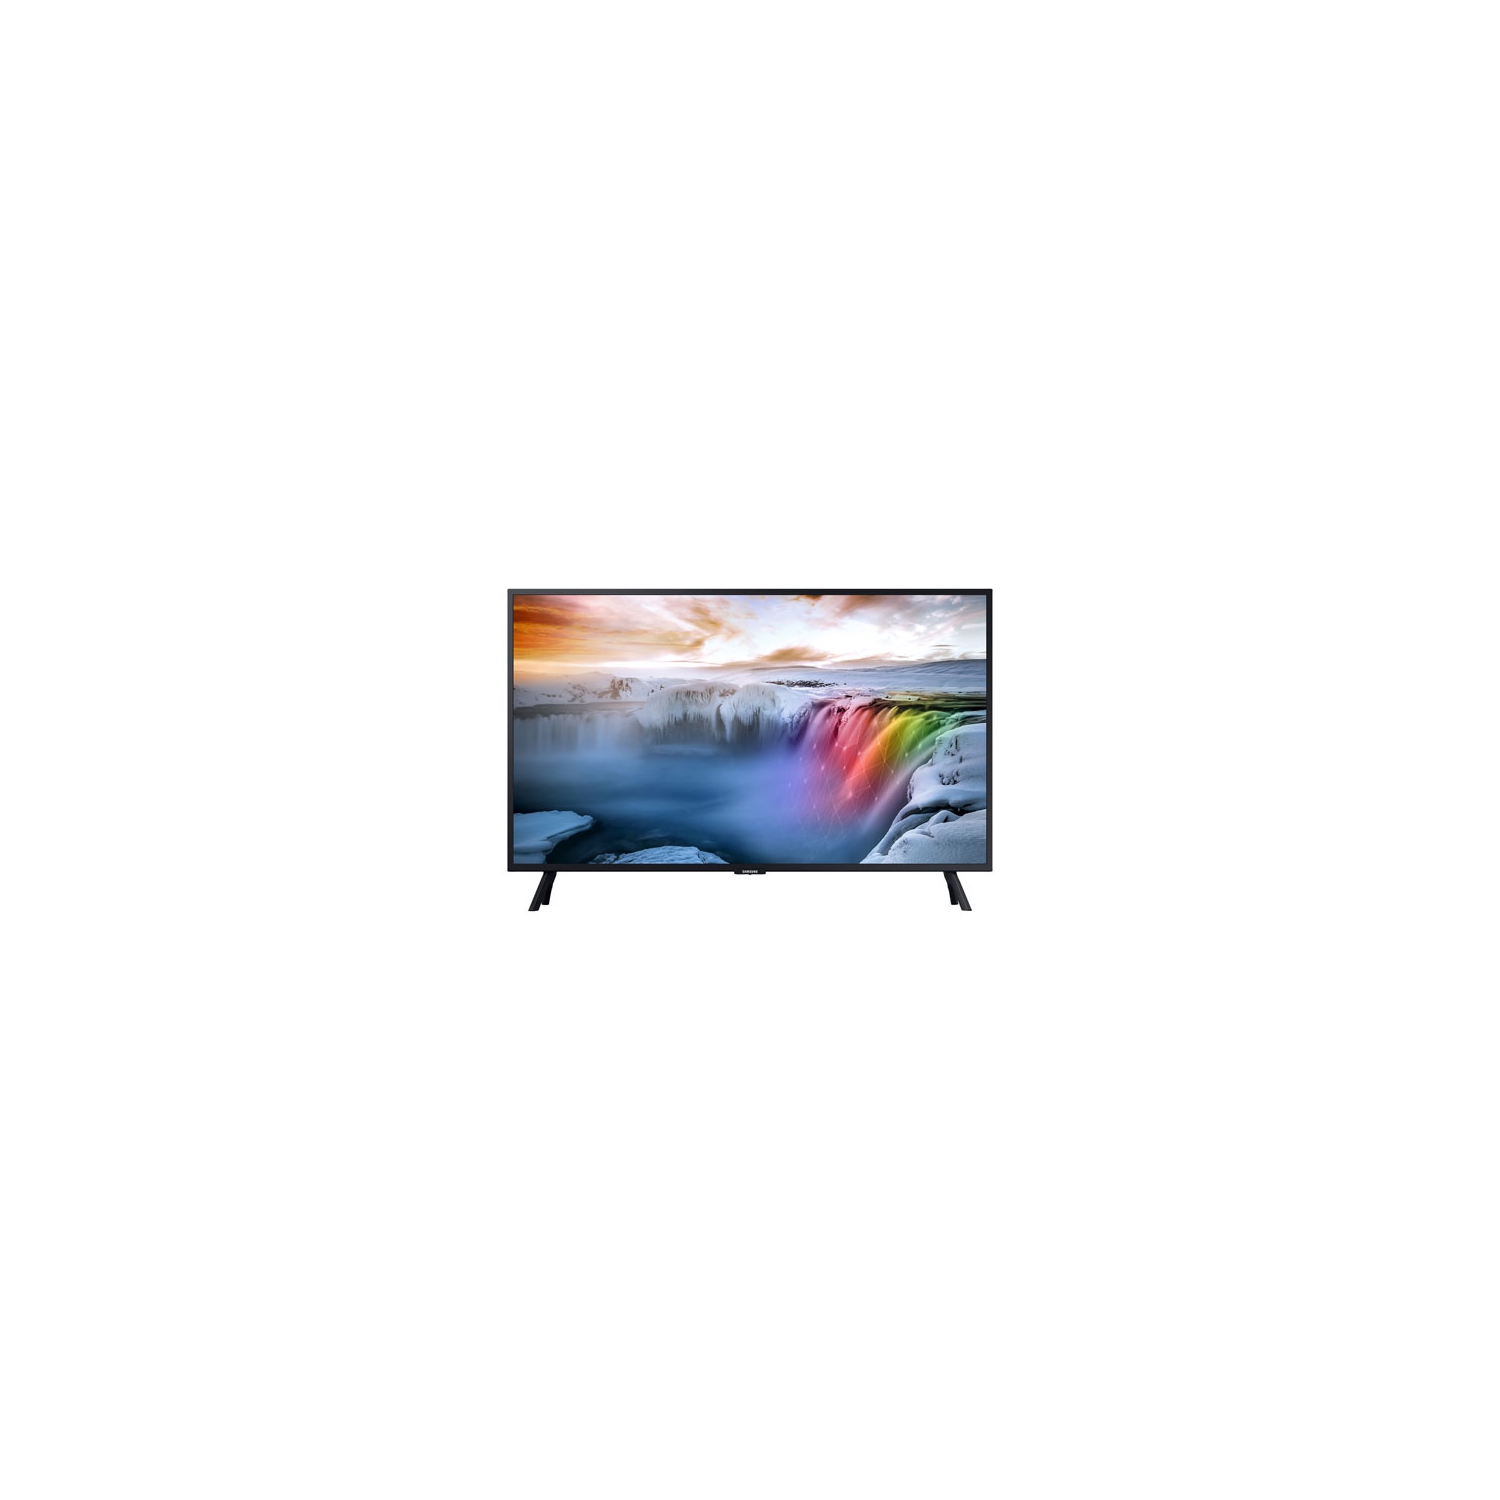 Samsung 32" 4K UHD HDR LED Tizen Smart TV (QN32Q50RAFXZC) - Open Box